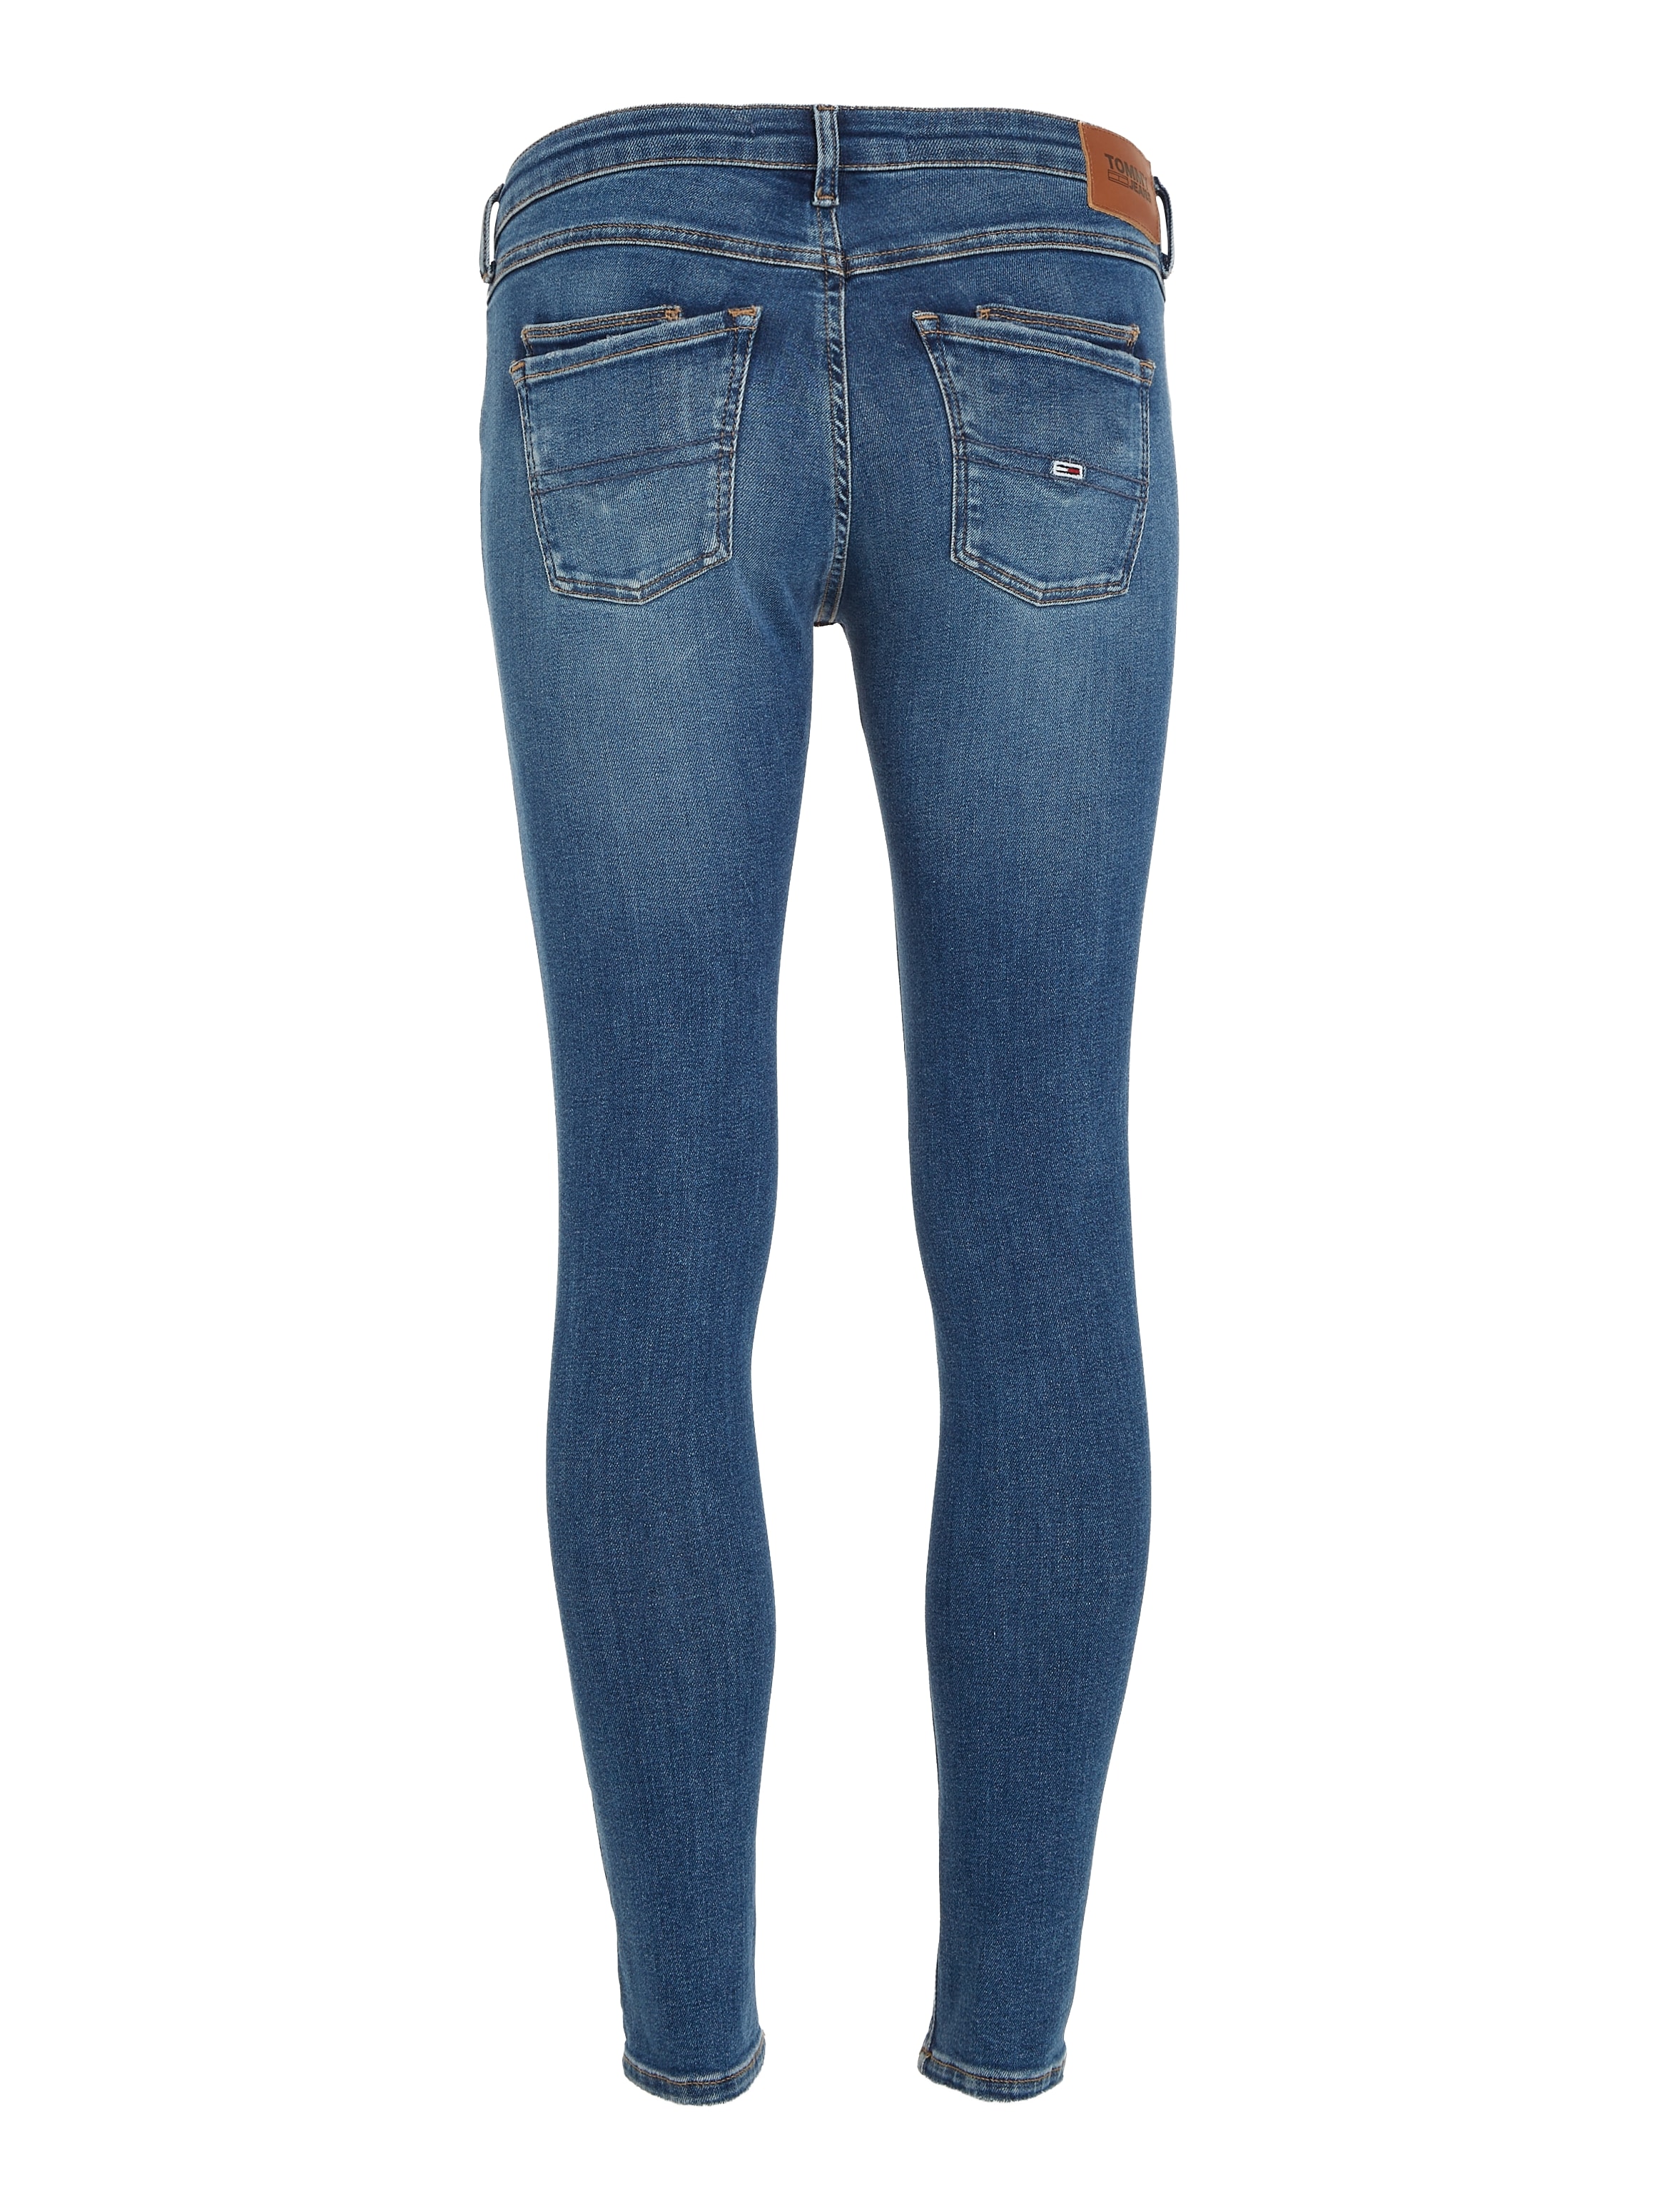 kaufen der mit »Scarlett«, an Jeans Flag Jeans gestickter Tommy Tommy Münztasche Skinny-fit-Jeans